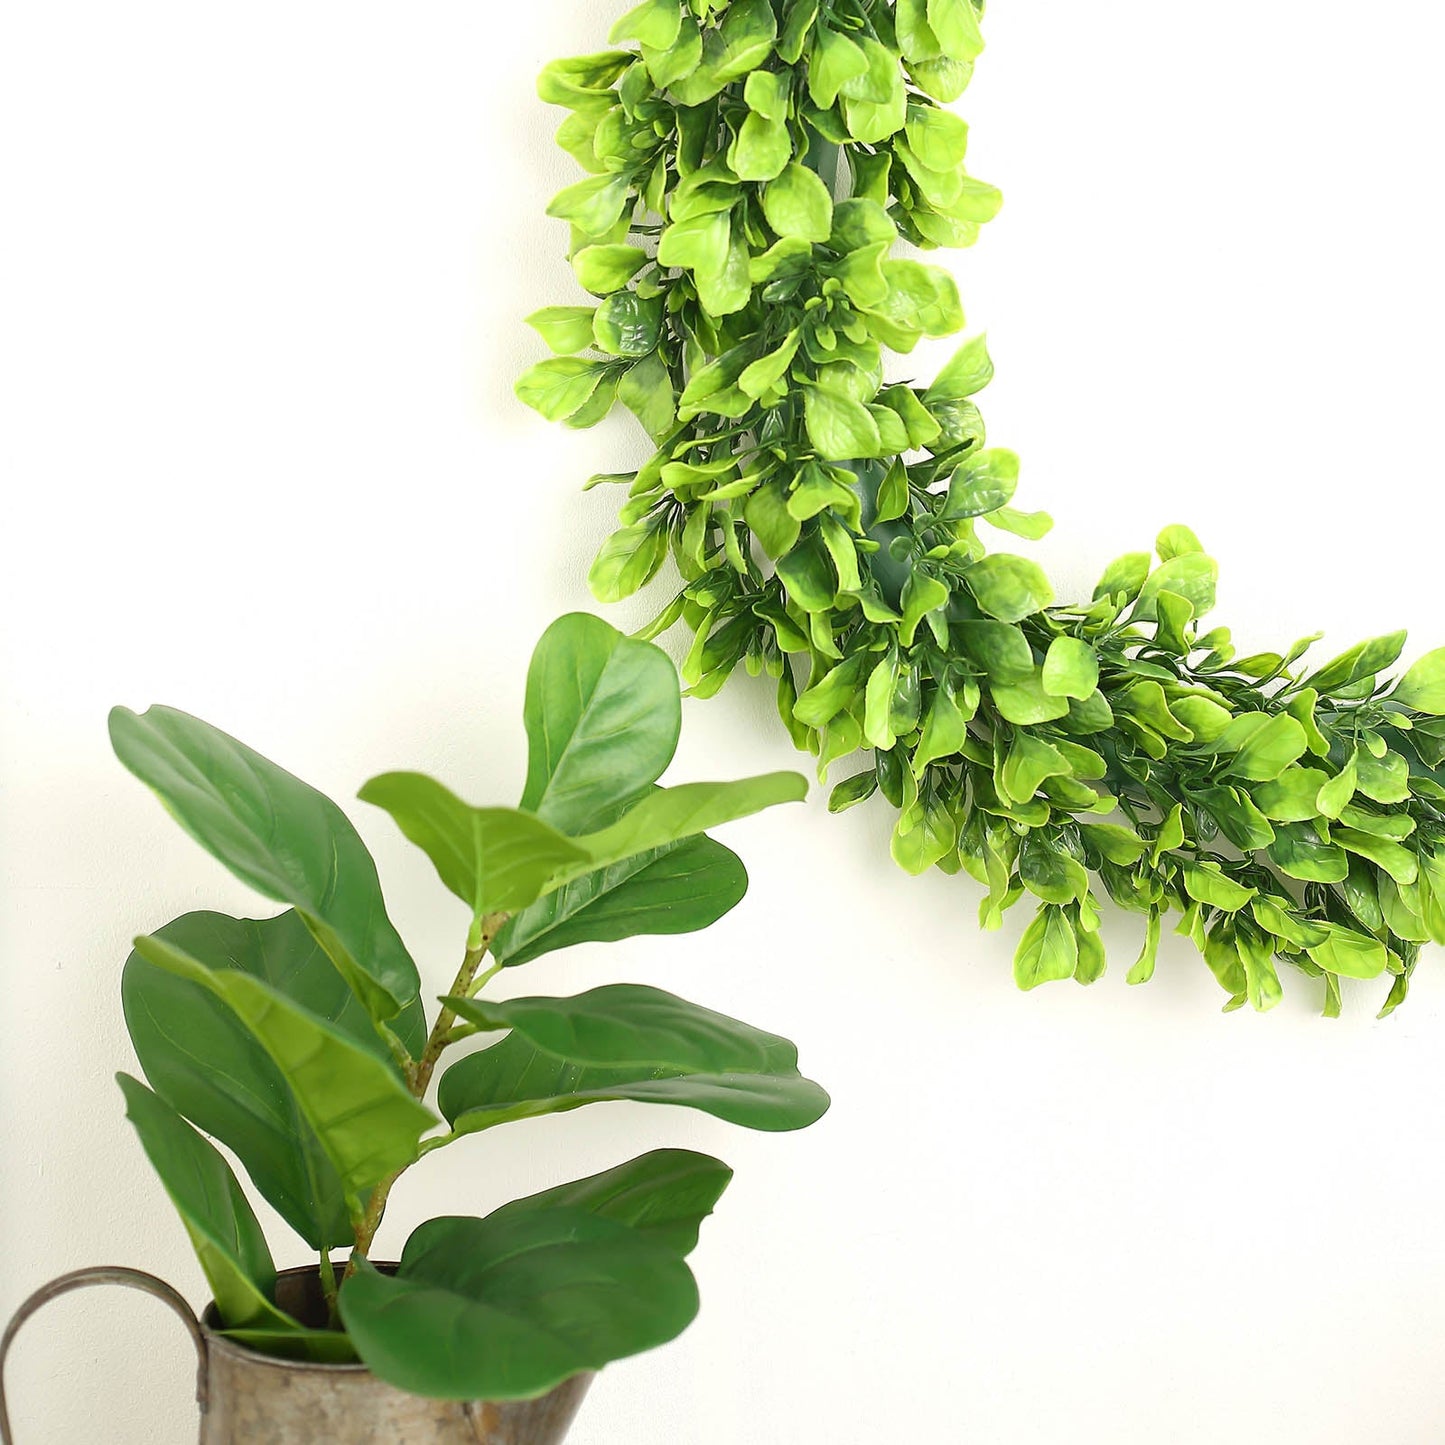 2 Pack Green Artificial Lifelike Jasmine Leaf Spring Wreaths 21"